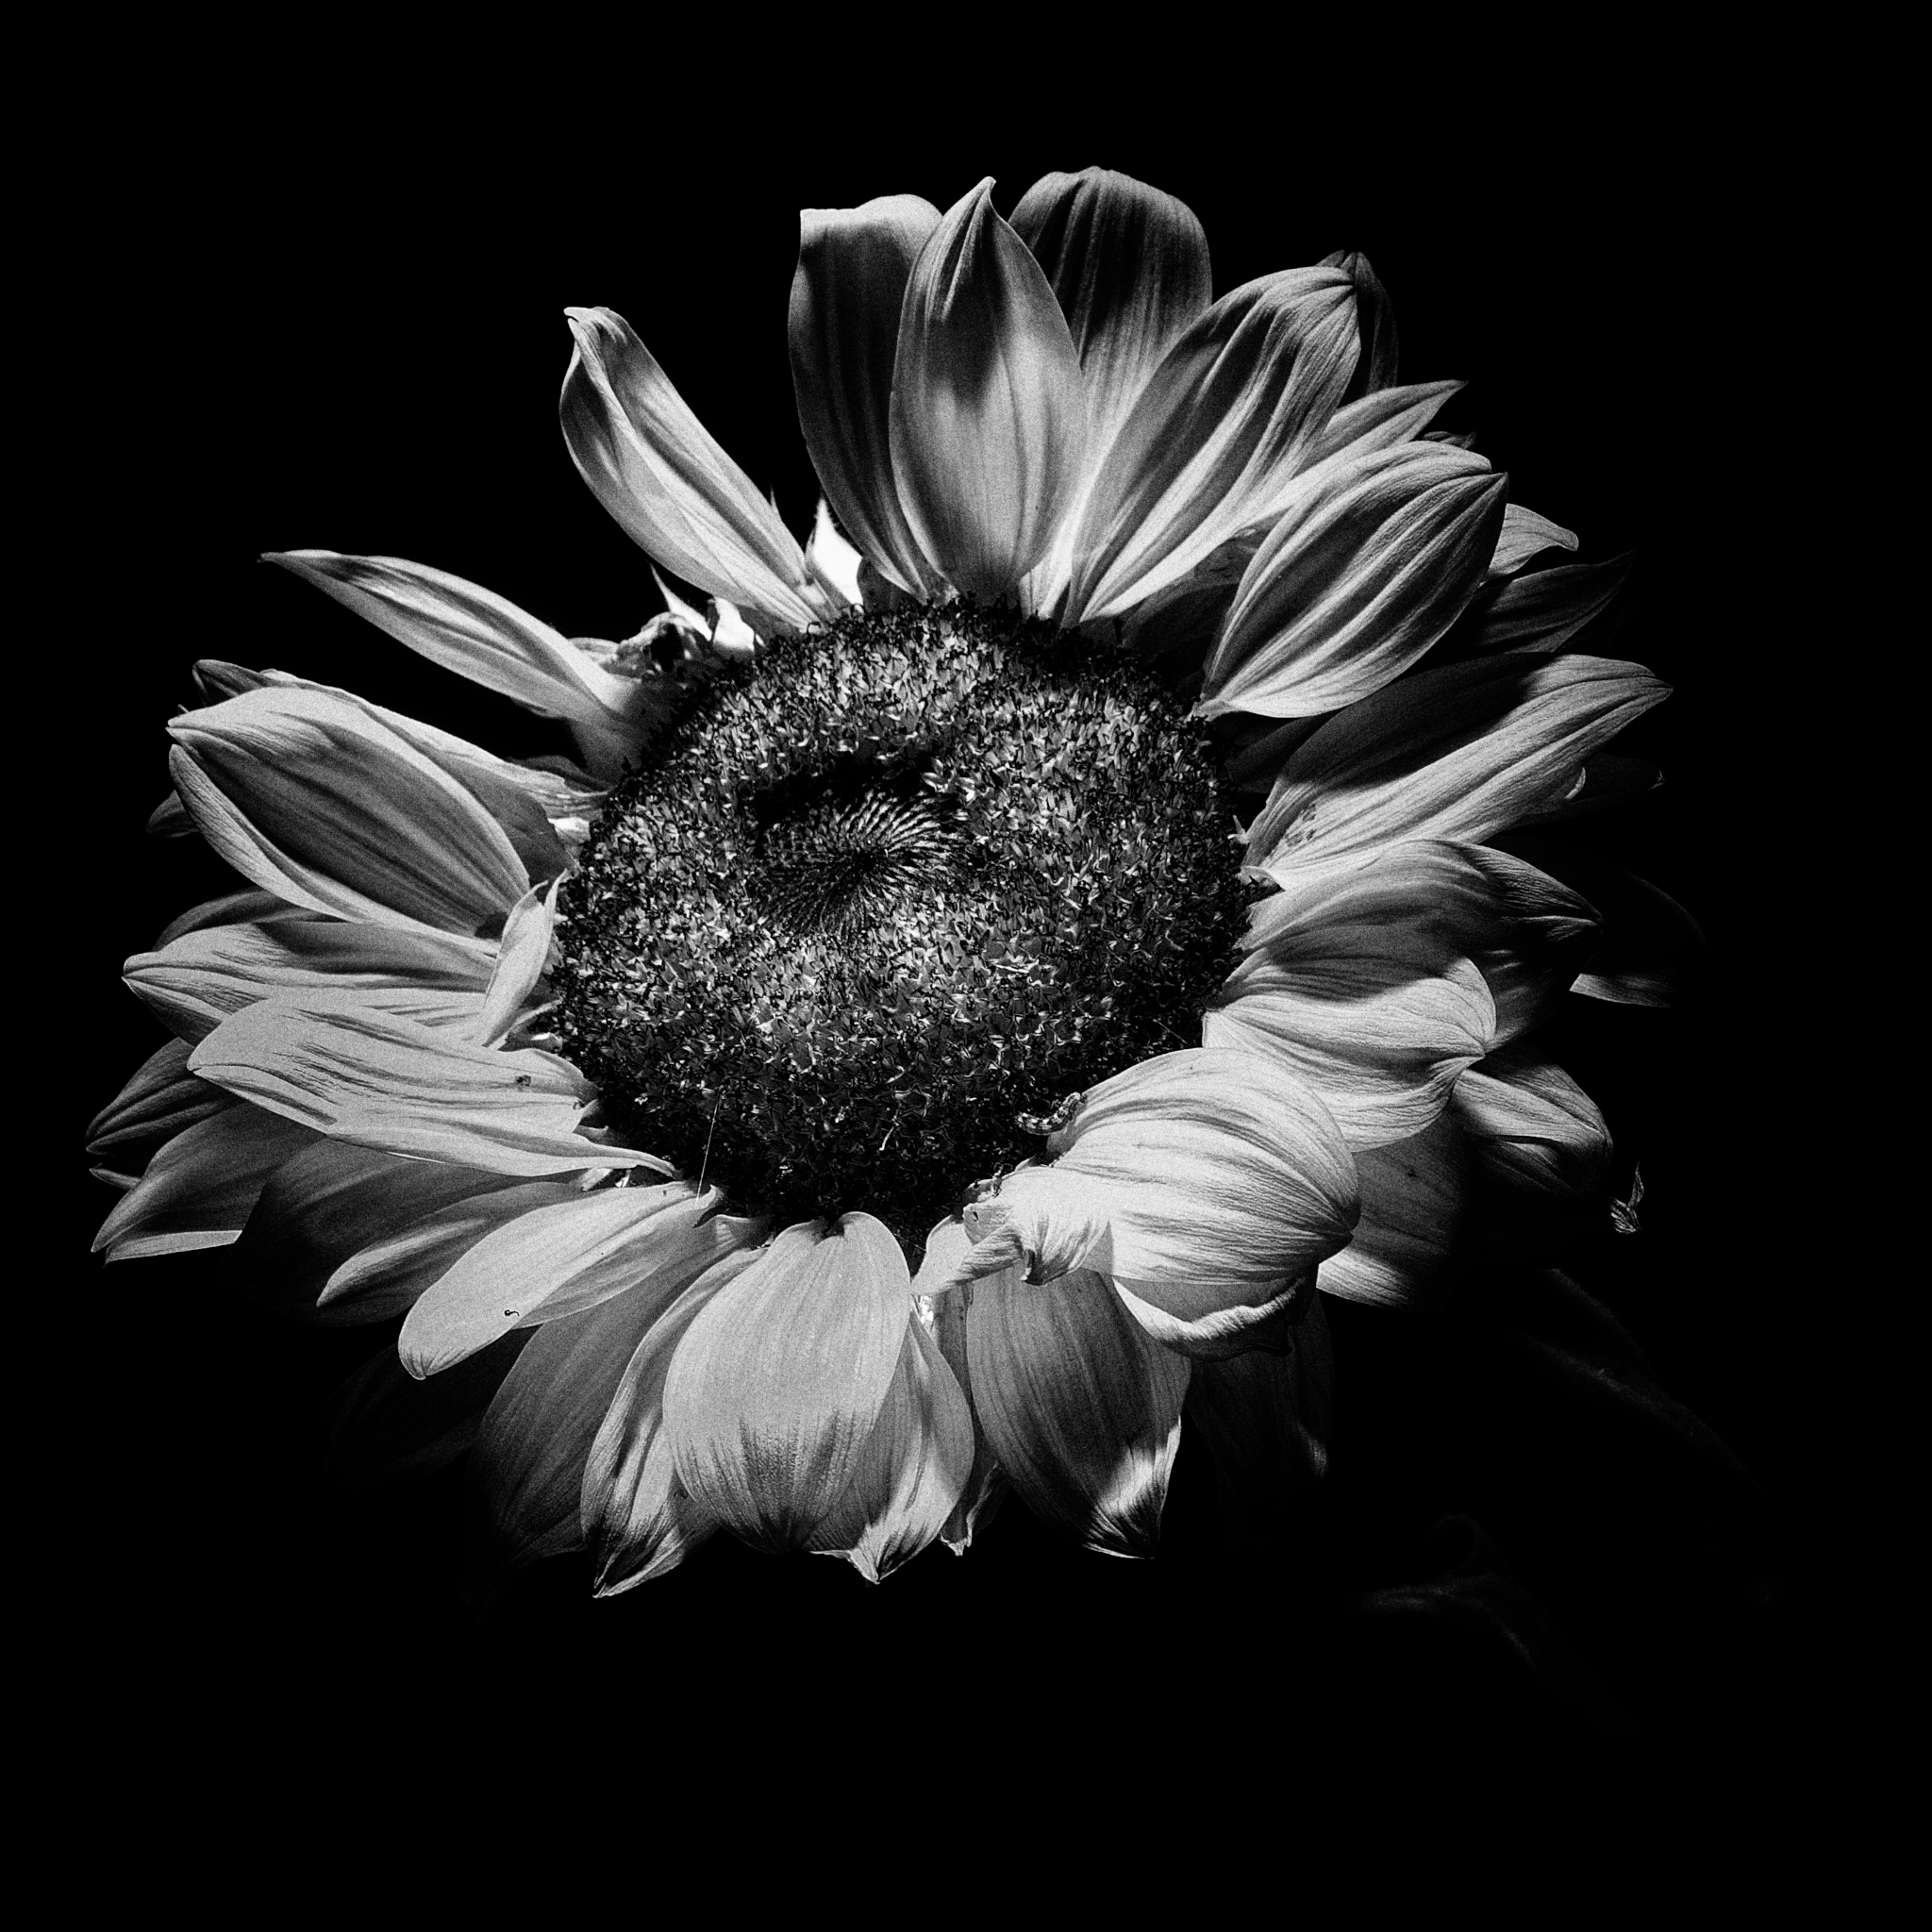 Sunflower b / w...